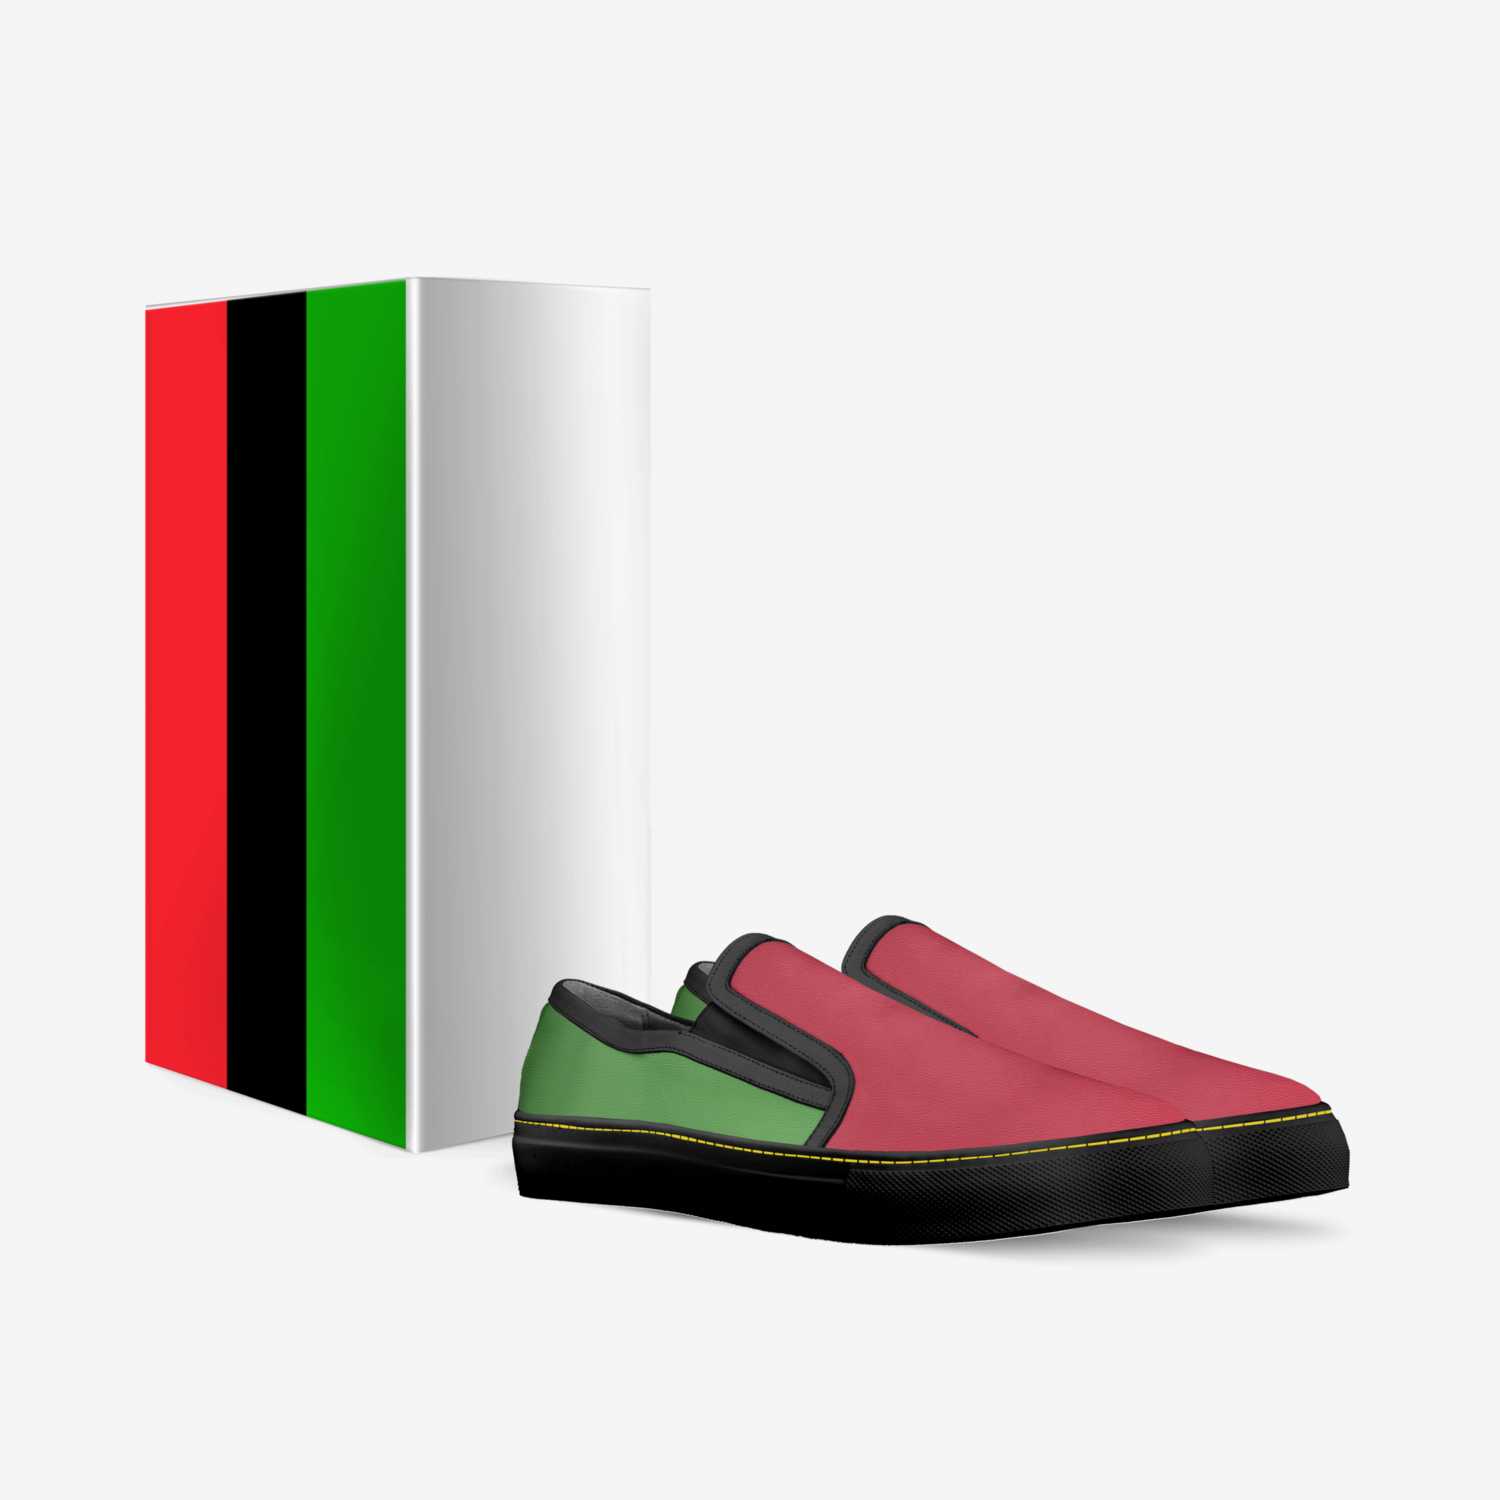 Jelani 1 custom made in Italy shoes by John H. Harris, Jr. | Box view